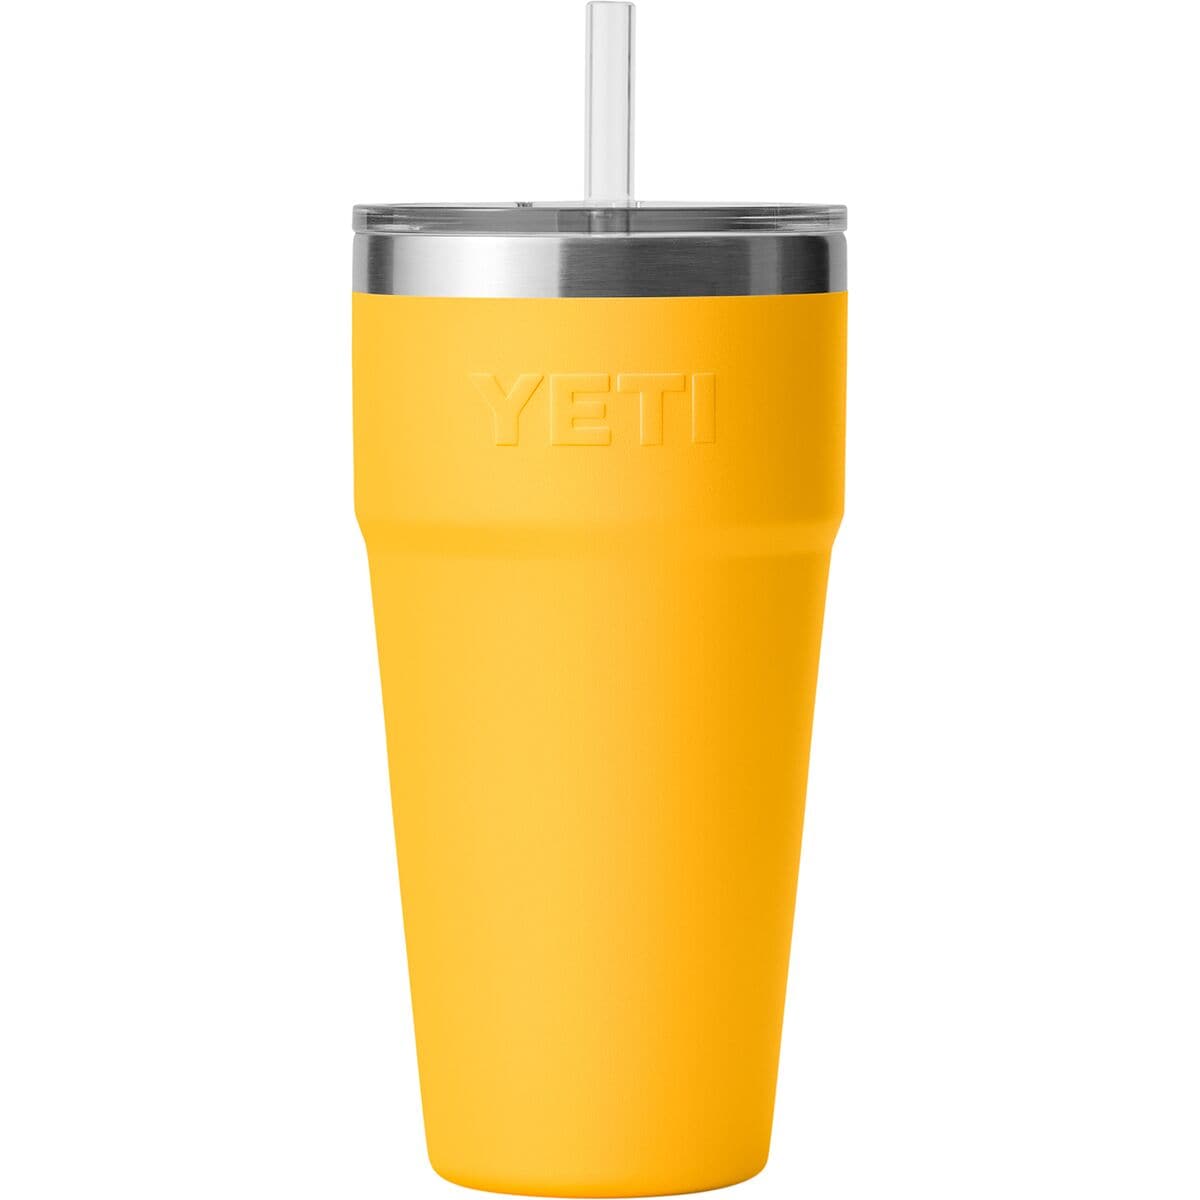  YETI Rambler 25 oz Straw Mug, Vacuum Insulated, Stainless  Steel, King Crab Orange: Home & Kitchen